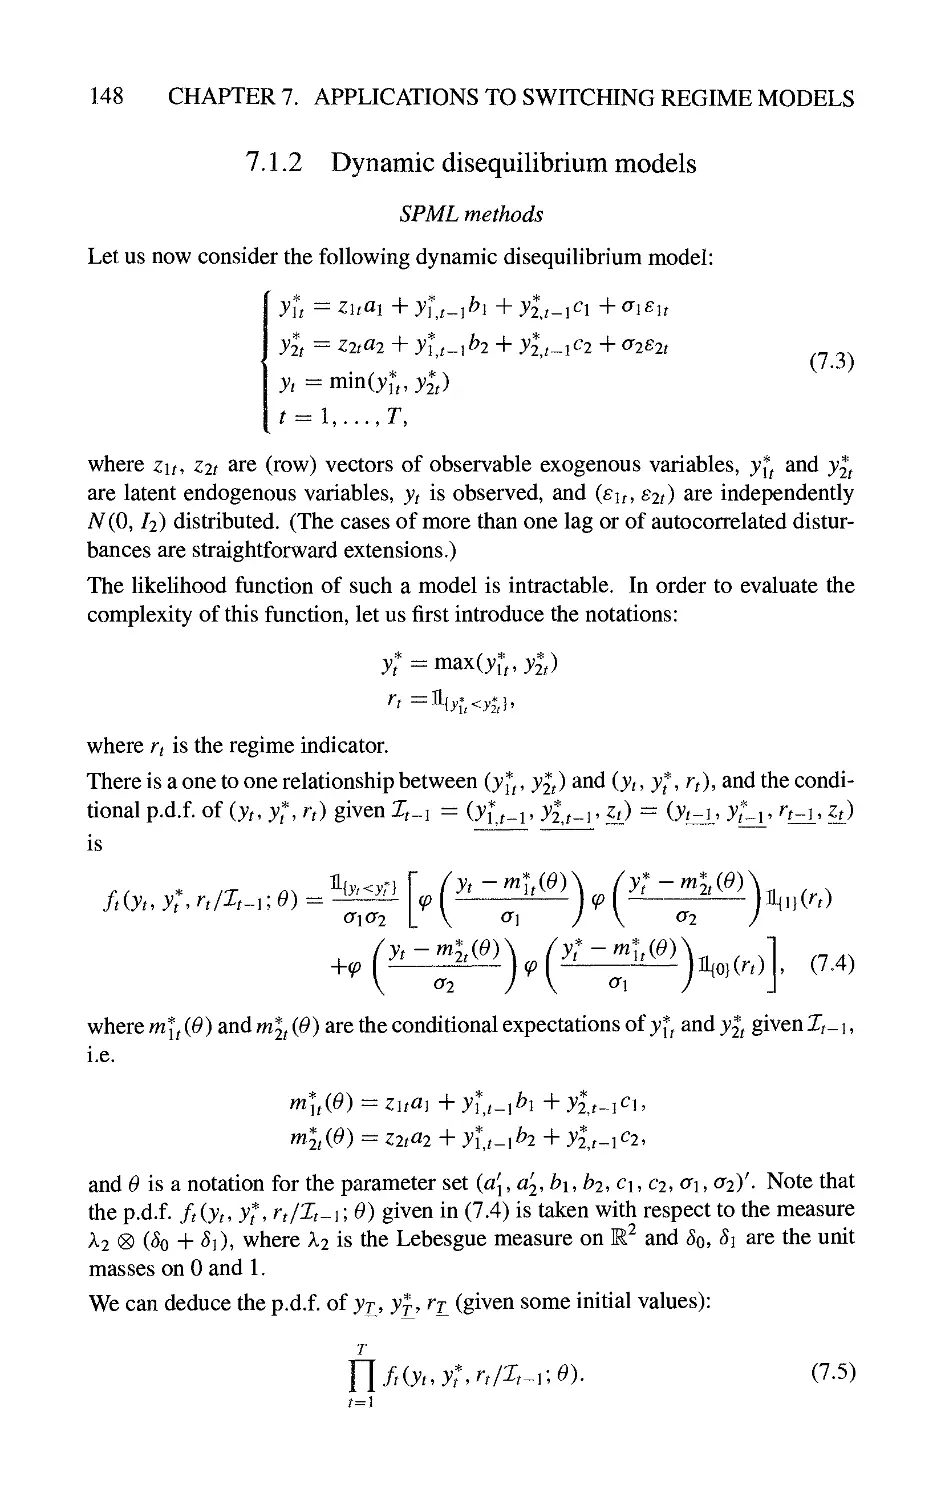 7.1.2 Dynamic disequilibrium models